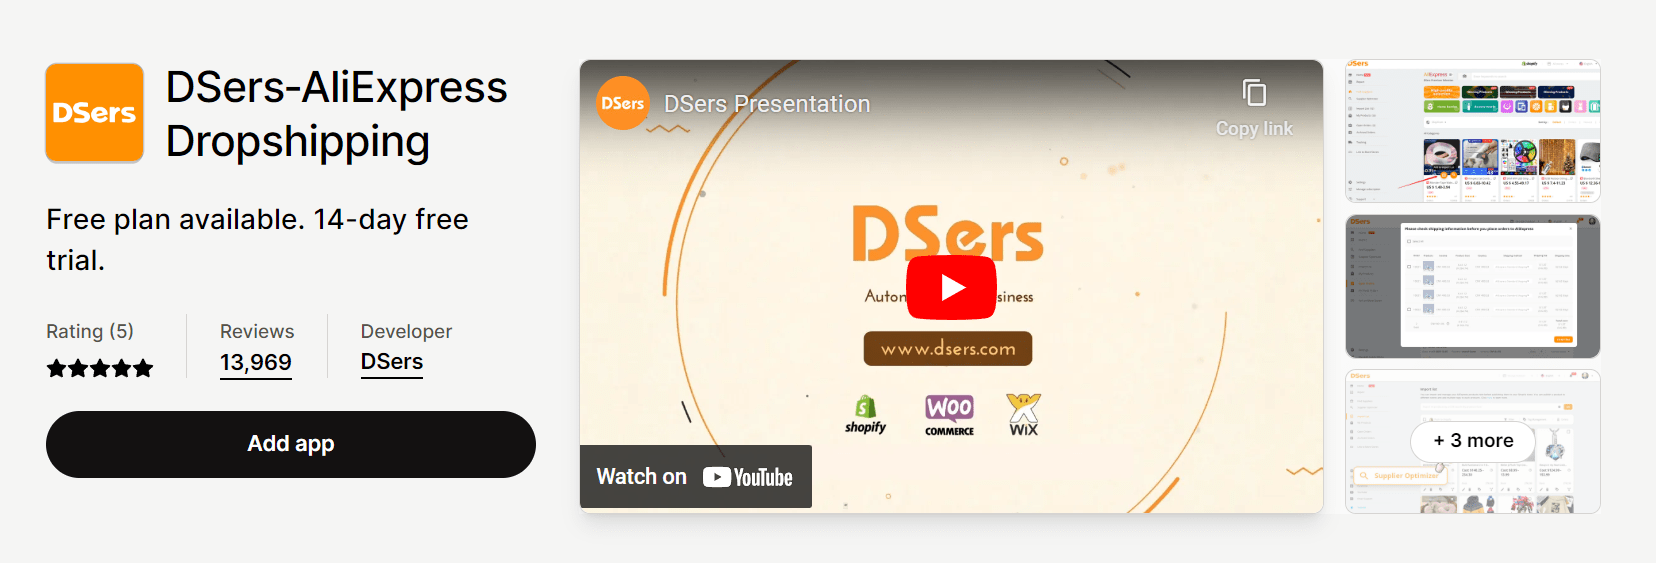 Dsers AliExpress تطبيق دروبشيبينغ